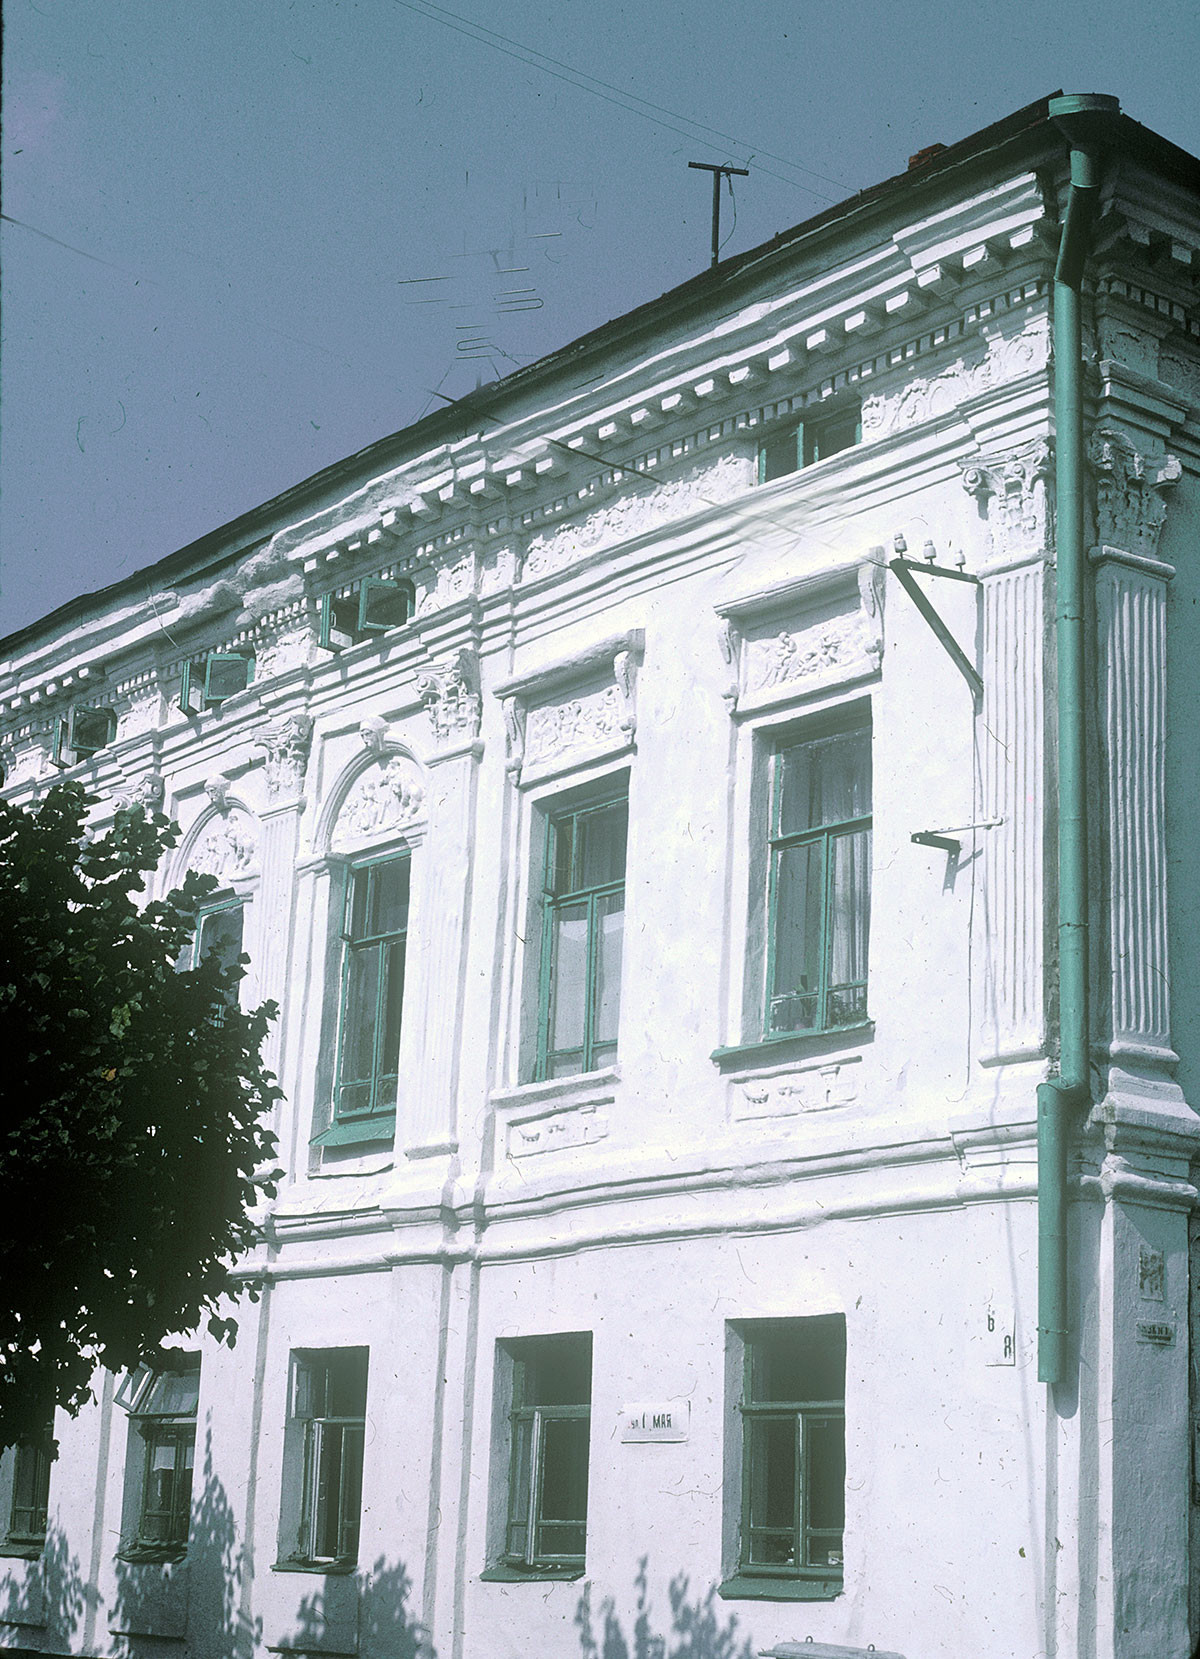 Hiša Strigaleva. Ulica Mlečni hrib (Moločnaja gora). Fasada na ulici 1. maja. 22. avgust 1988
